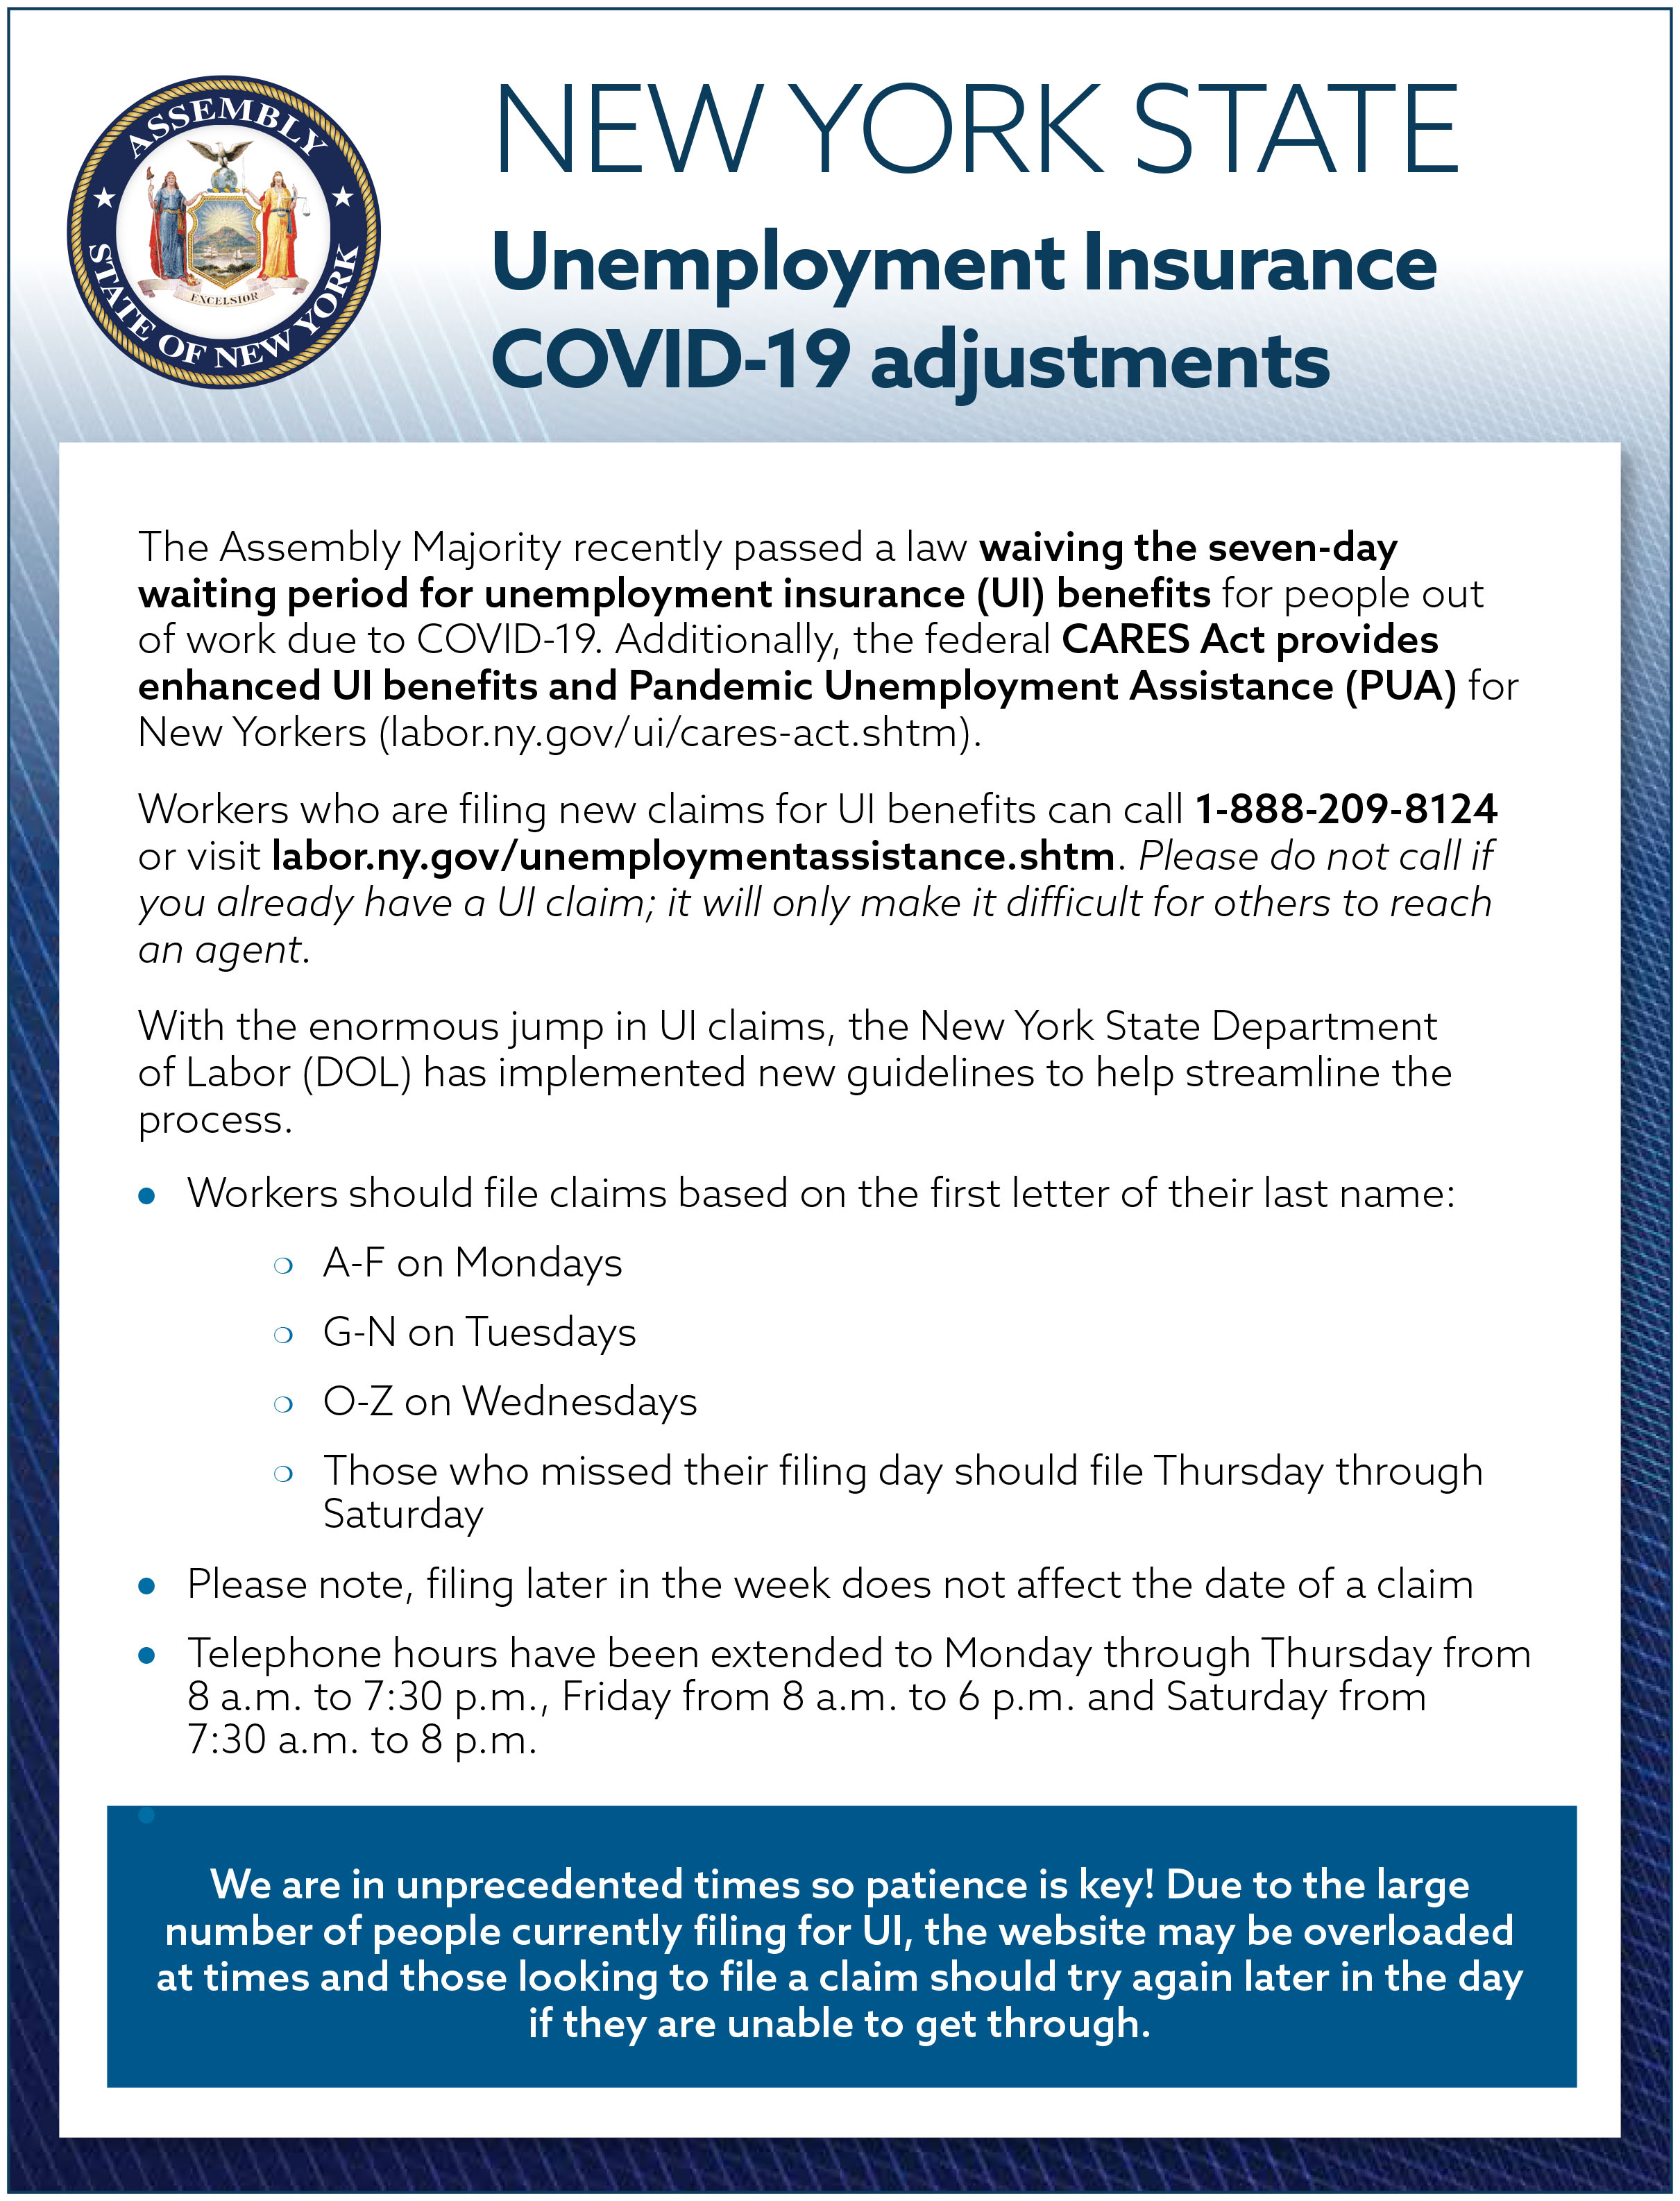 Unemployment Insurance COVID-19 Adjustments